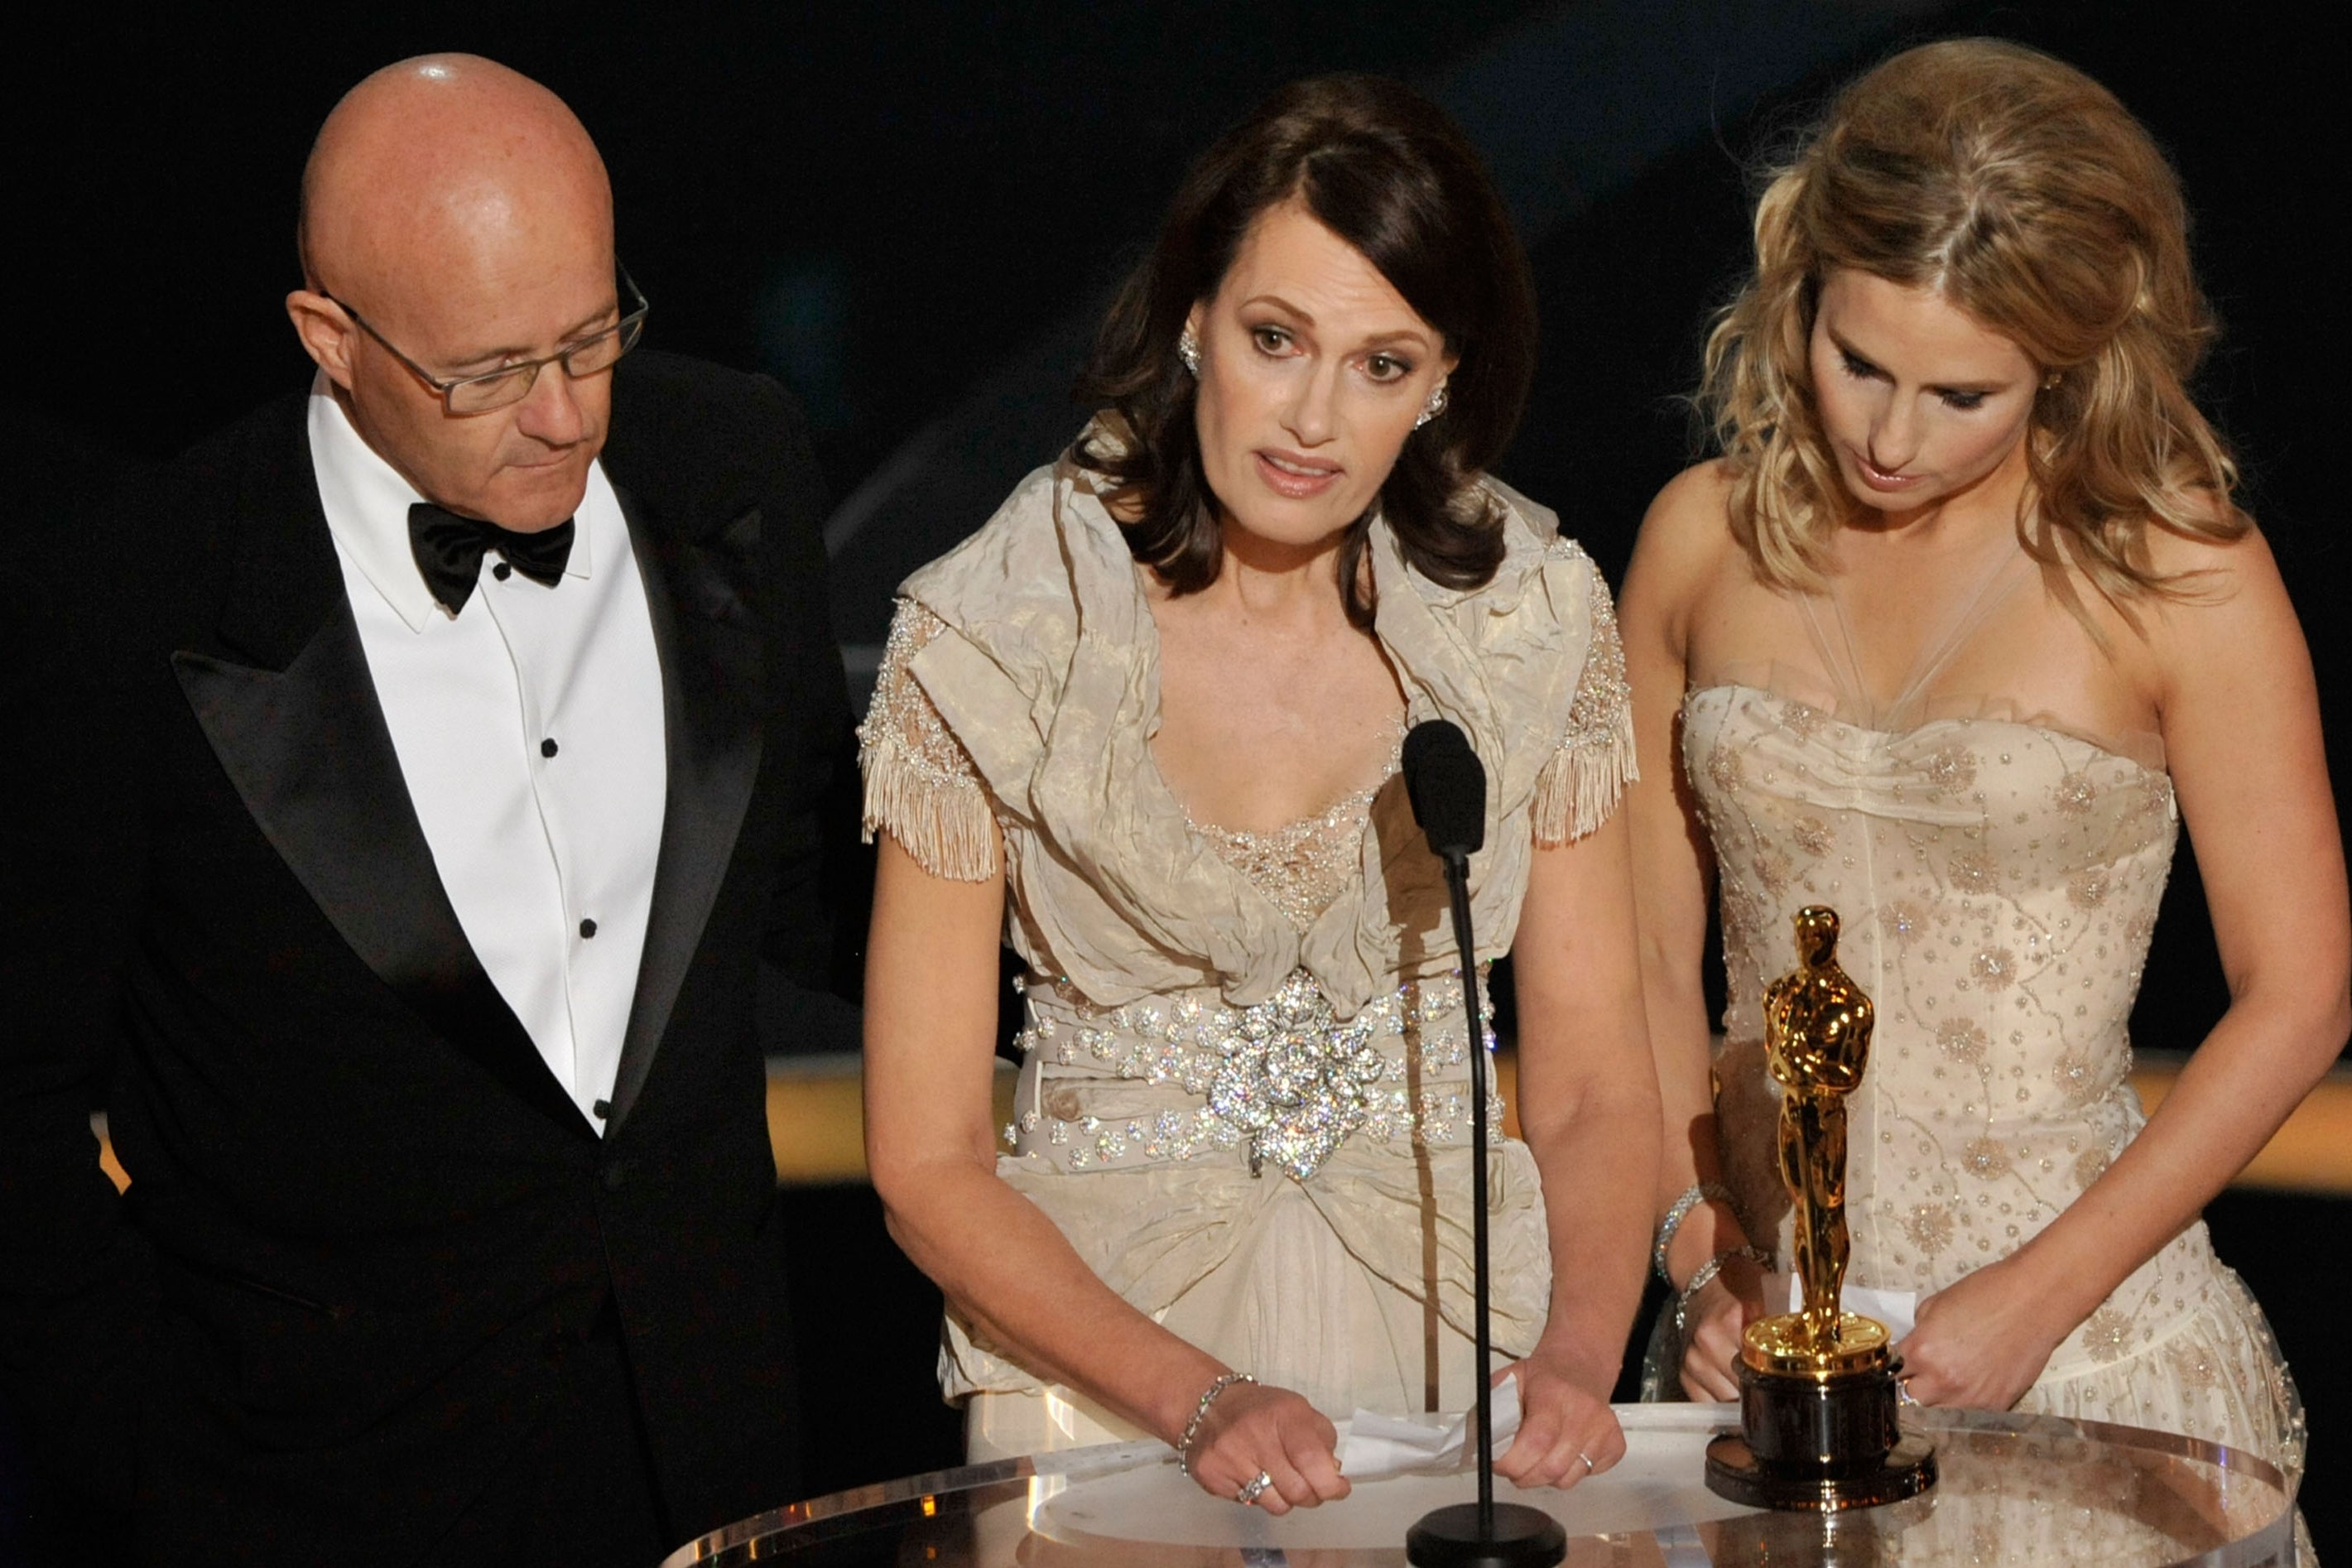 Heath Ledger’s father Kim, mother Sally and sister Kate accept his Oscar on his behalf at the 2009 Academy Awards